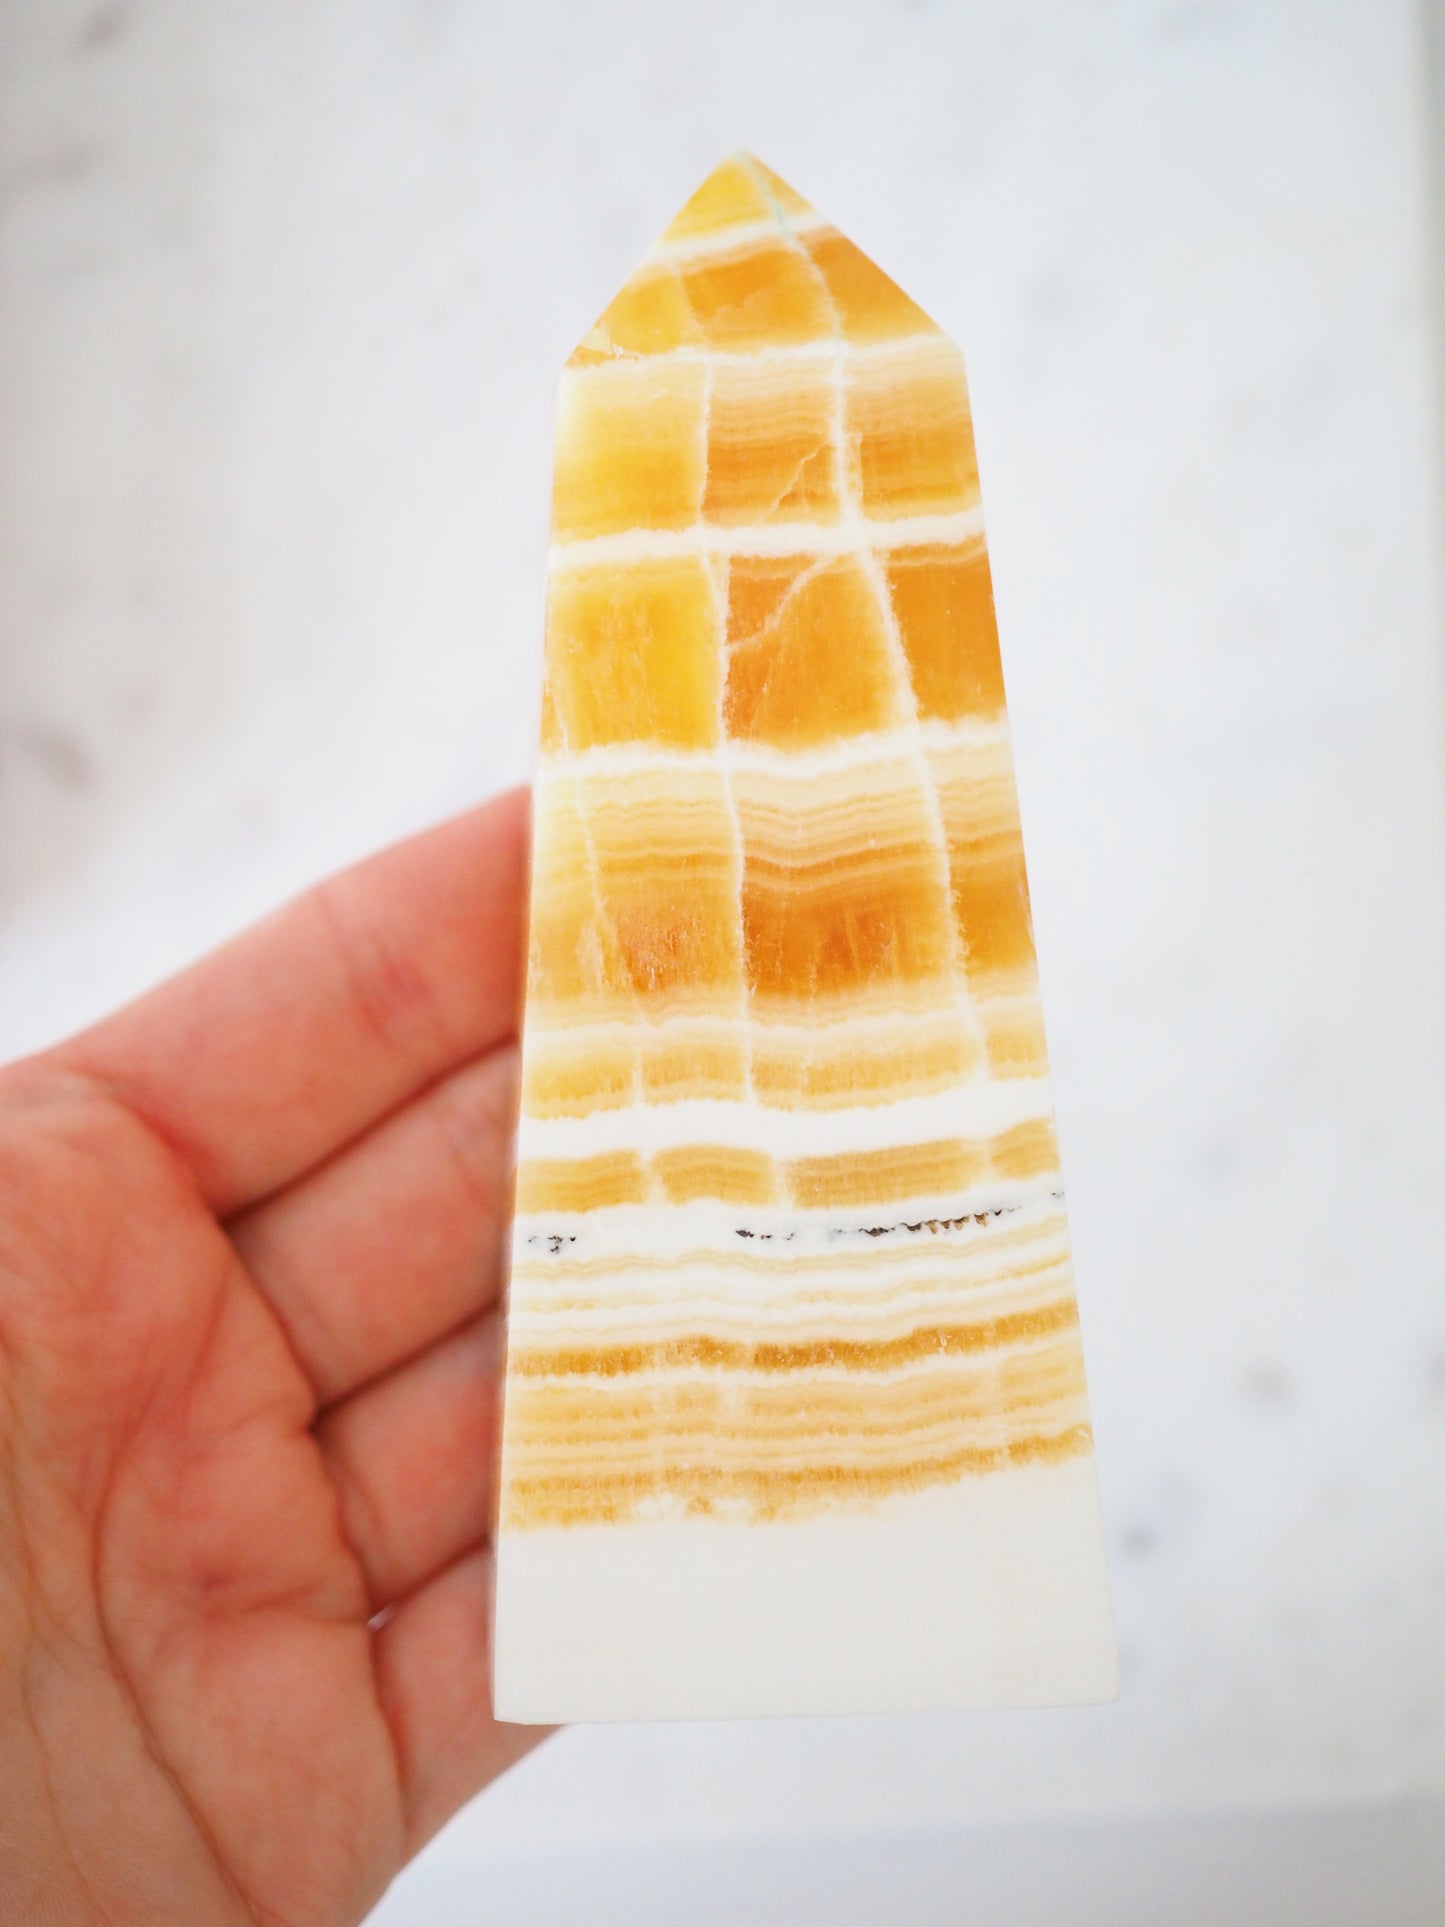 Juicy Orangen Calcit Obelisk 11-12cm High Quality (92) - aus Mexiko